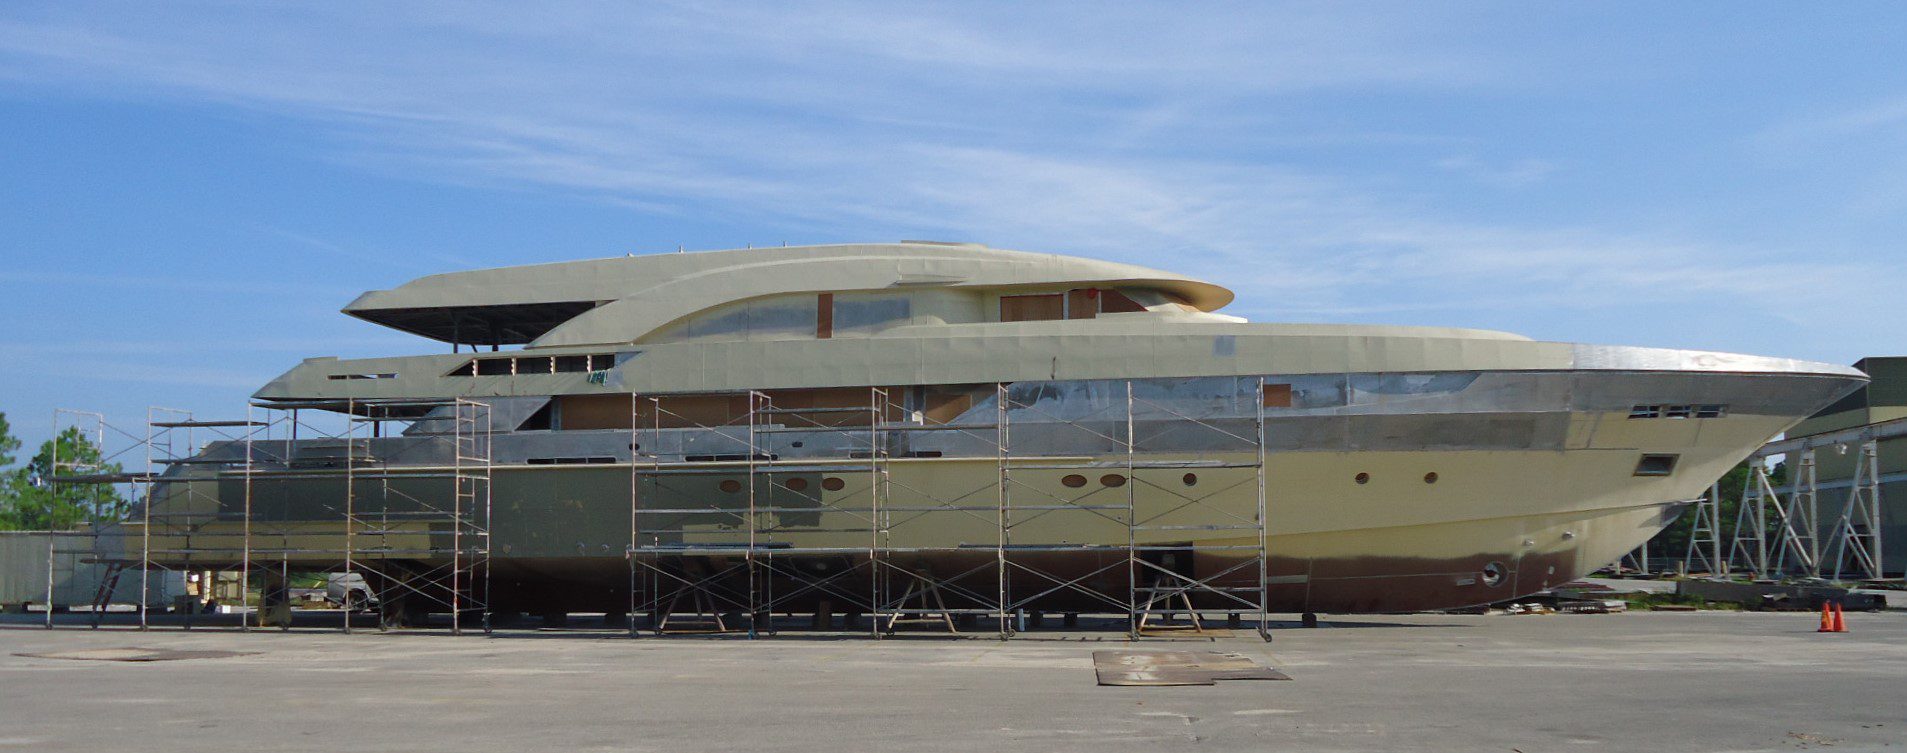 Trinity Tri-Deck Superyacht Auction Happening In Hot Market